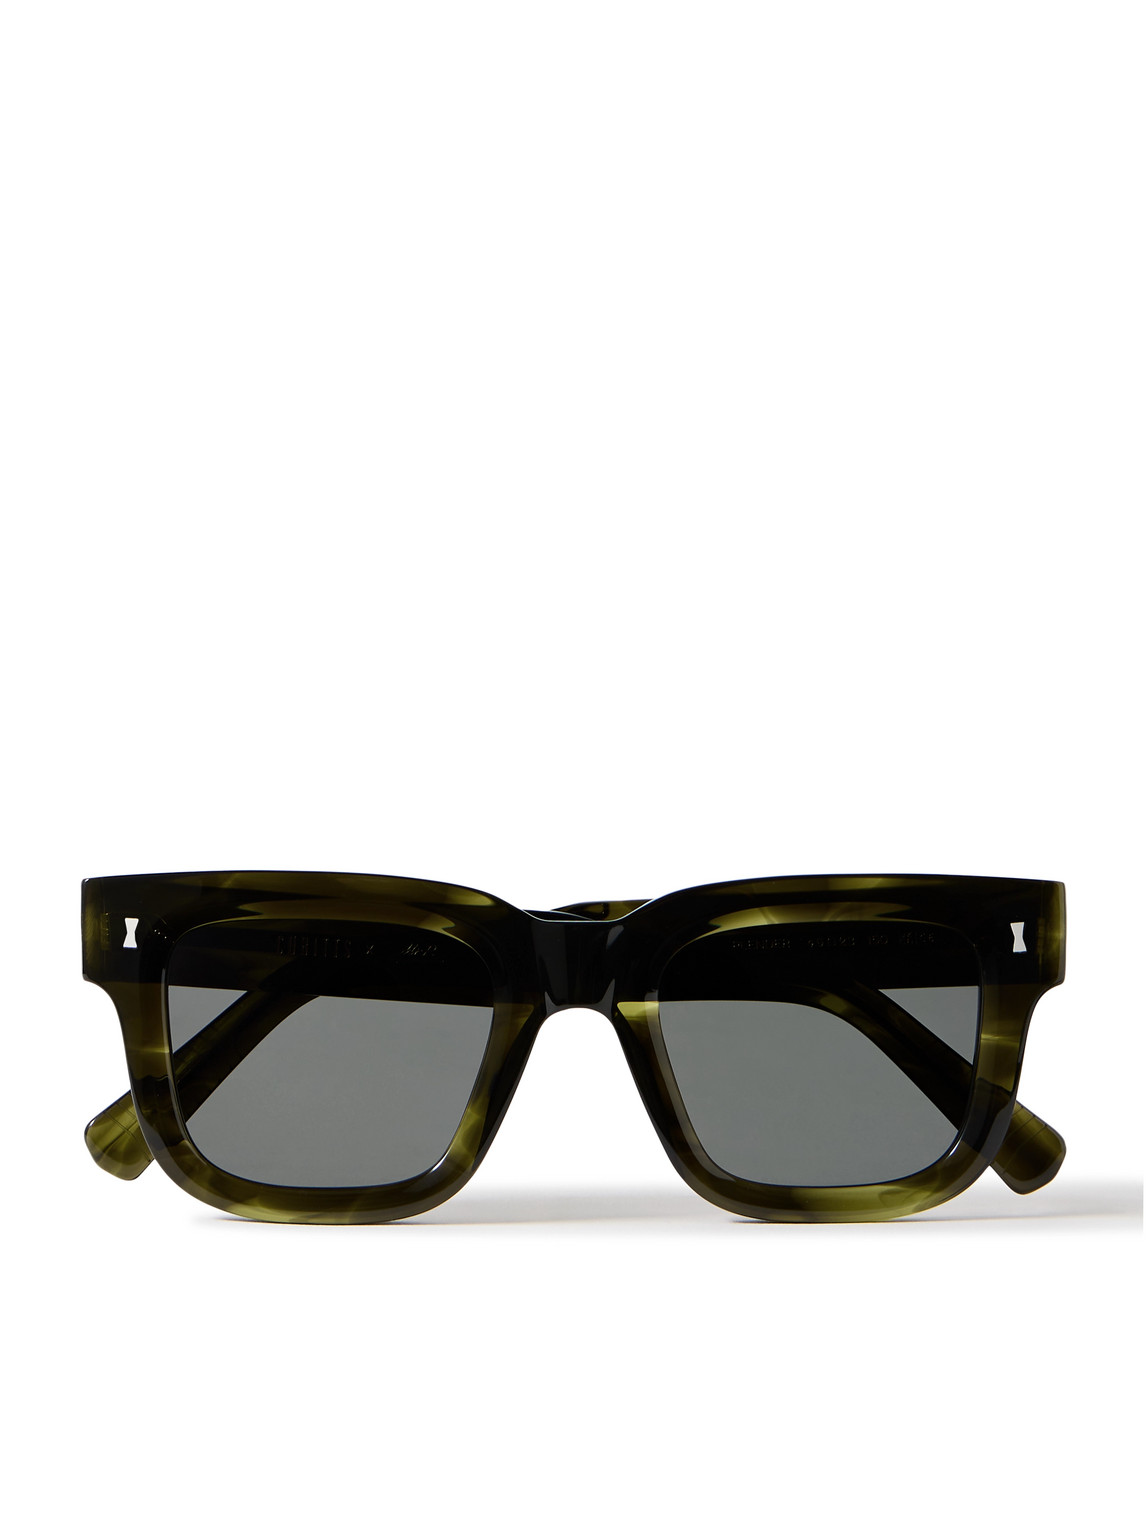 Cubitts Plender D-Frame Acetate Sunglasses